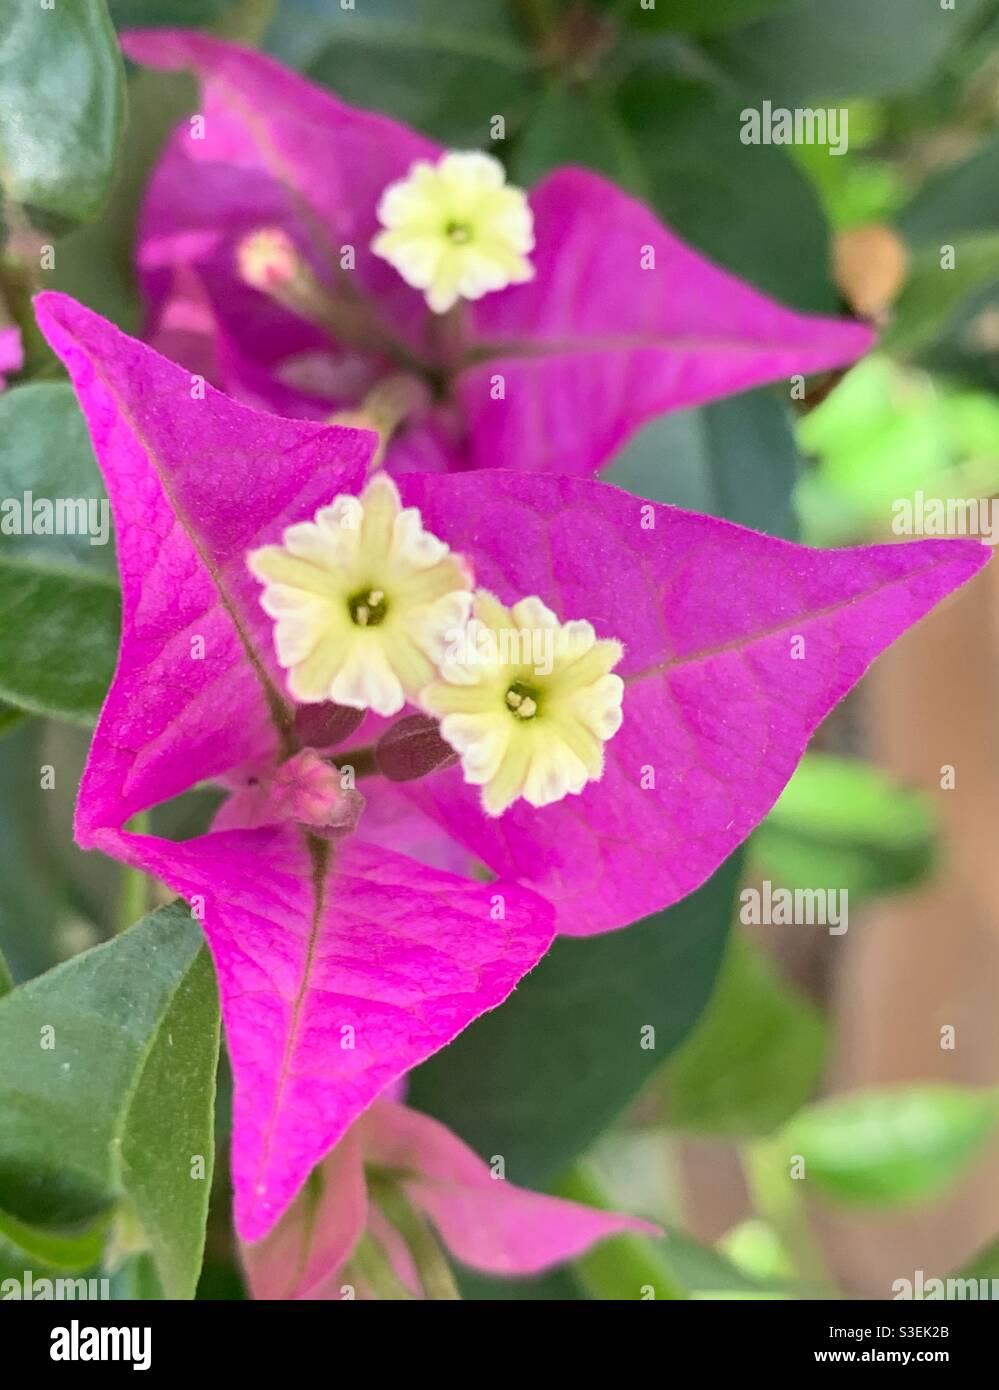 Rosa Bougainvillea Blumen Stockfoto